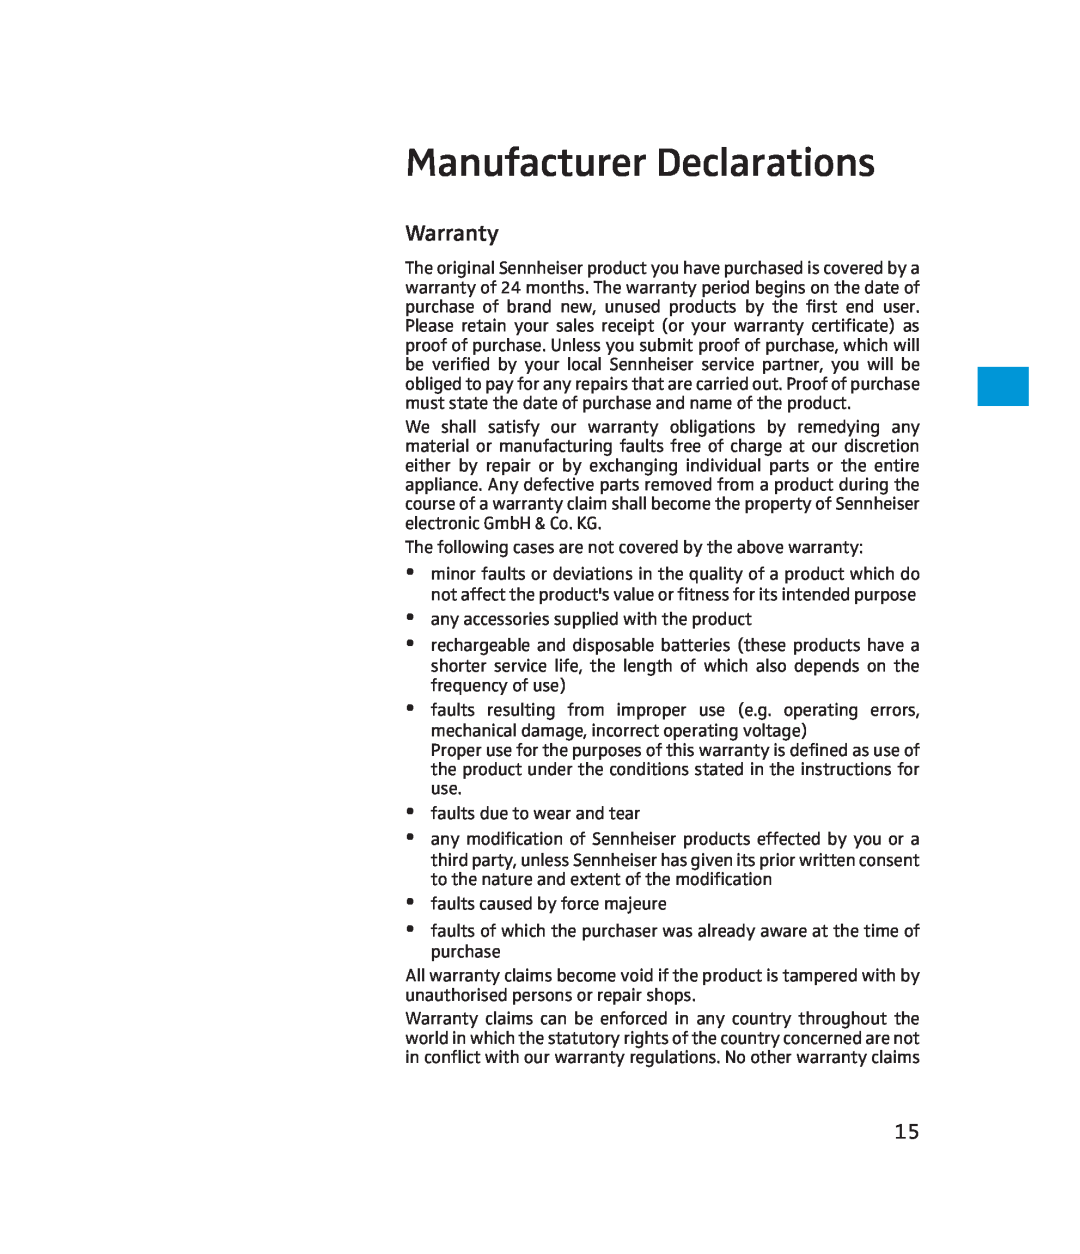 Sennheiser 500371 instruction manual Manufacturer Declarations, Warranty 